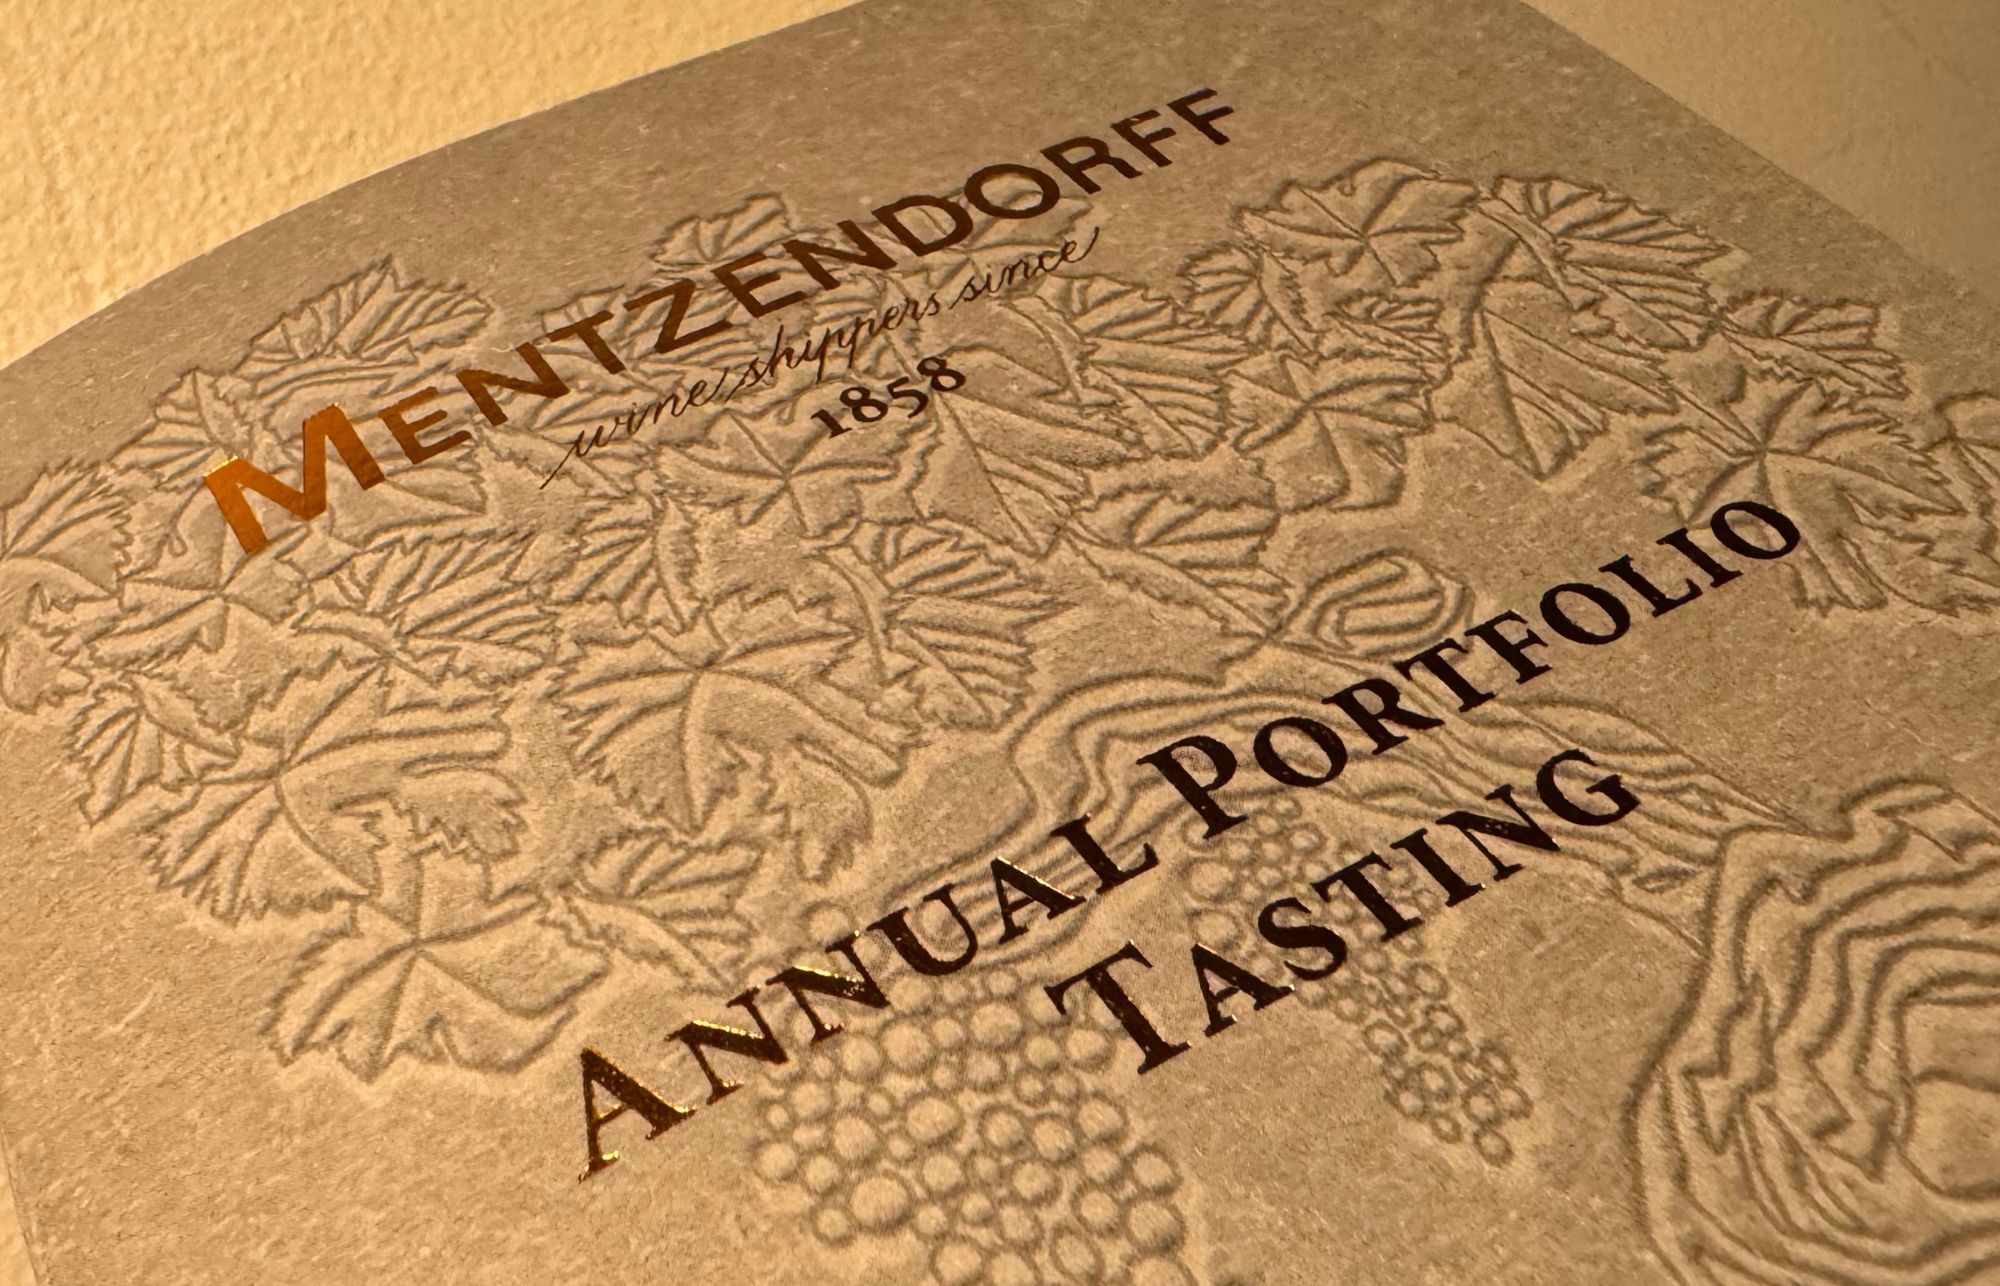 Mike Turner: Mentzendorff puts on a masterclass of a portfolio tasting